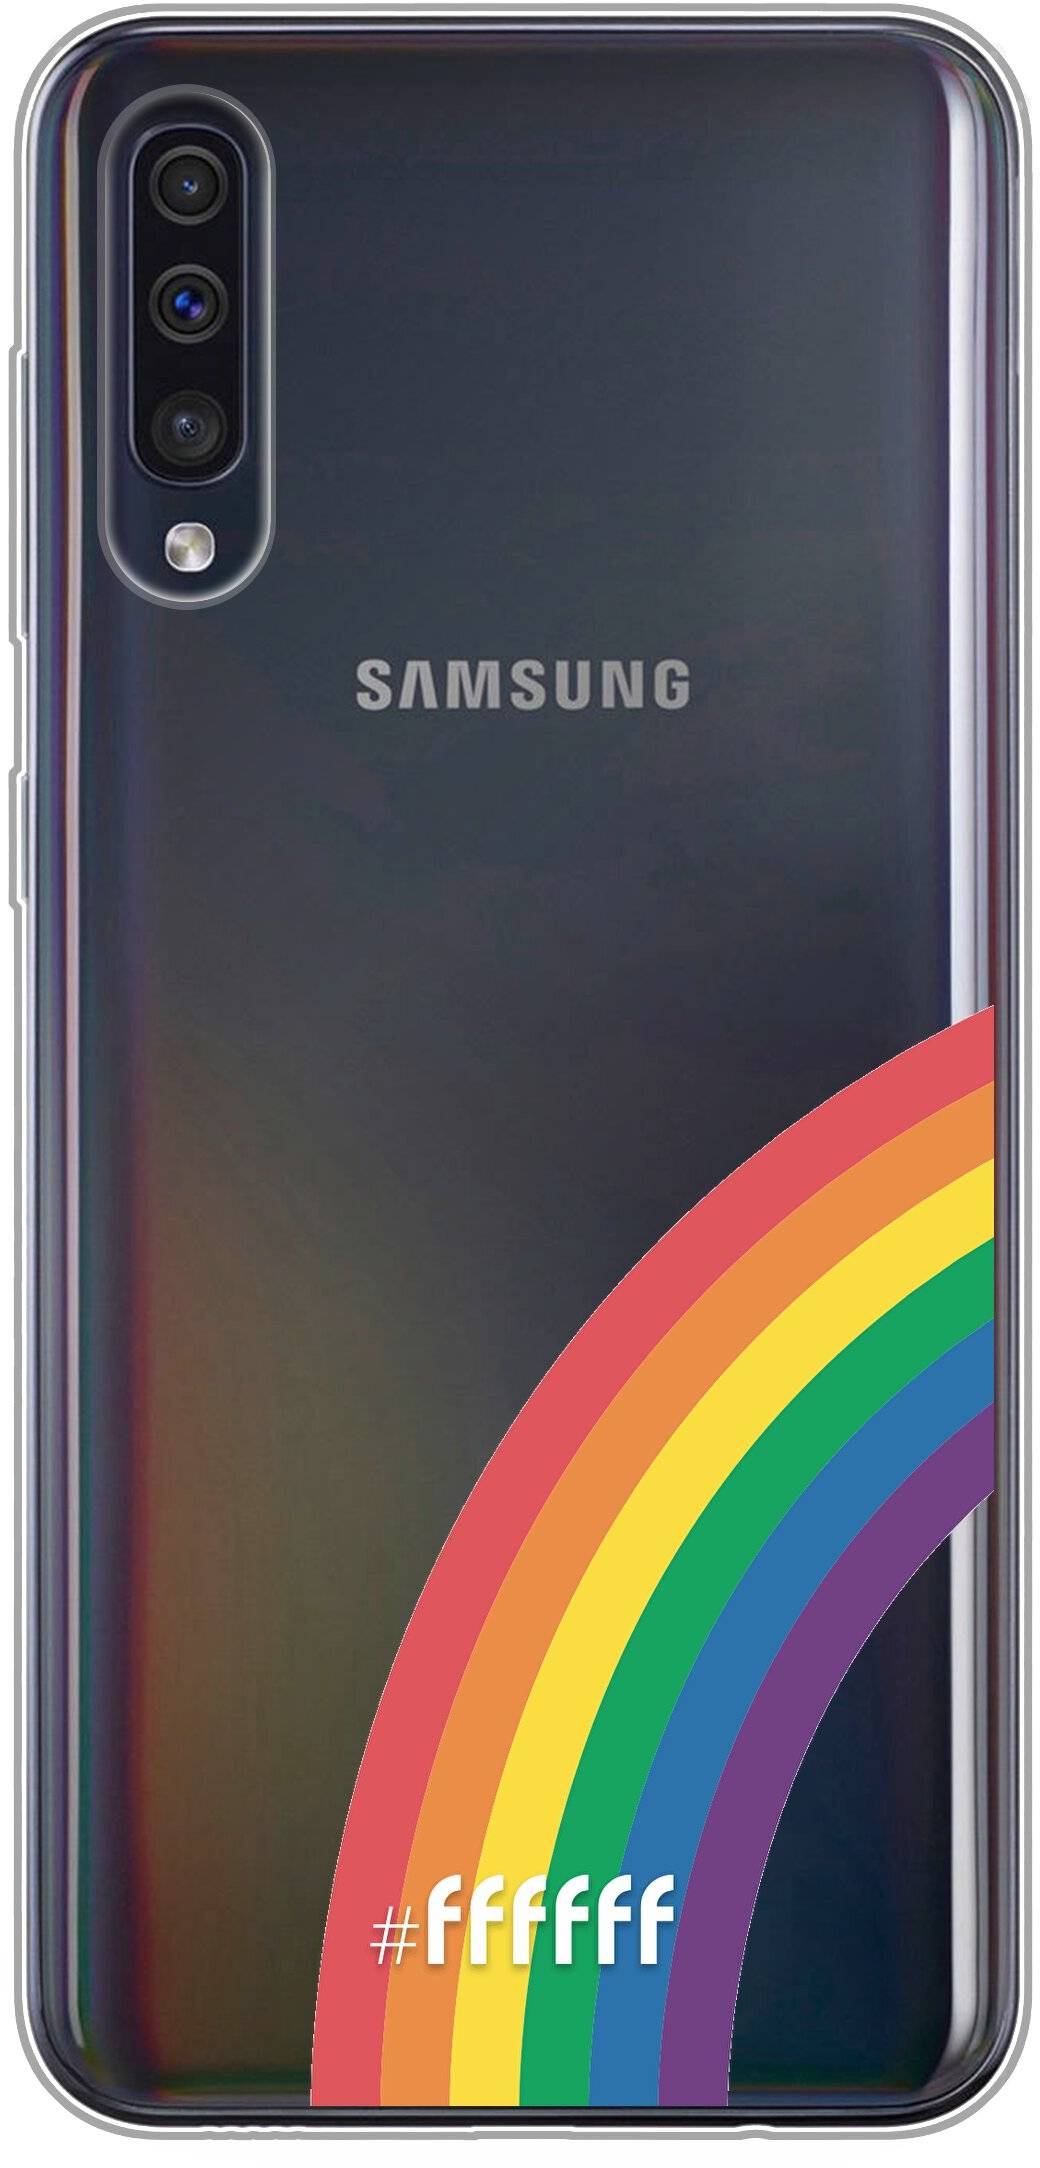 #LGBT - Rainbow Galaxy A30s